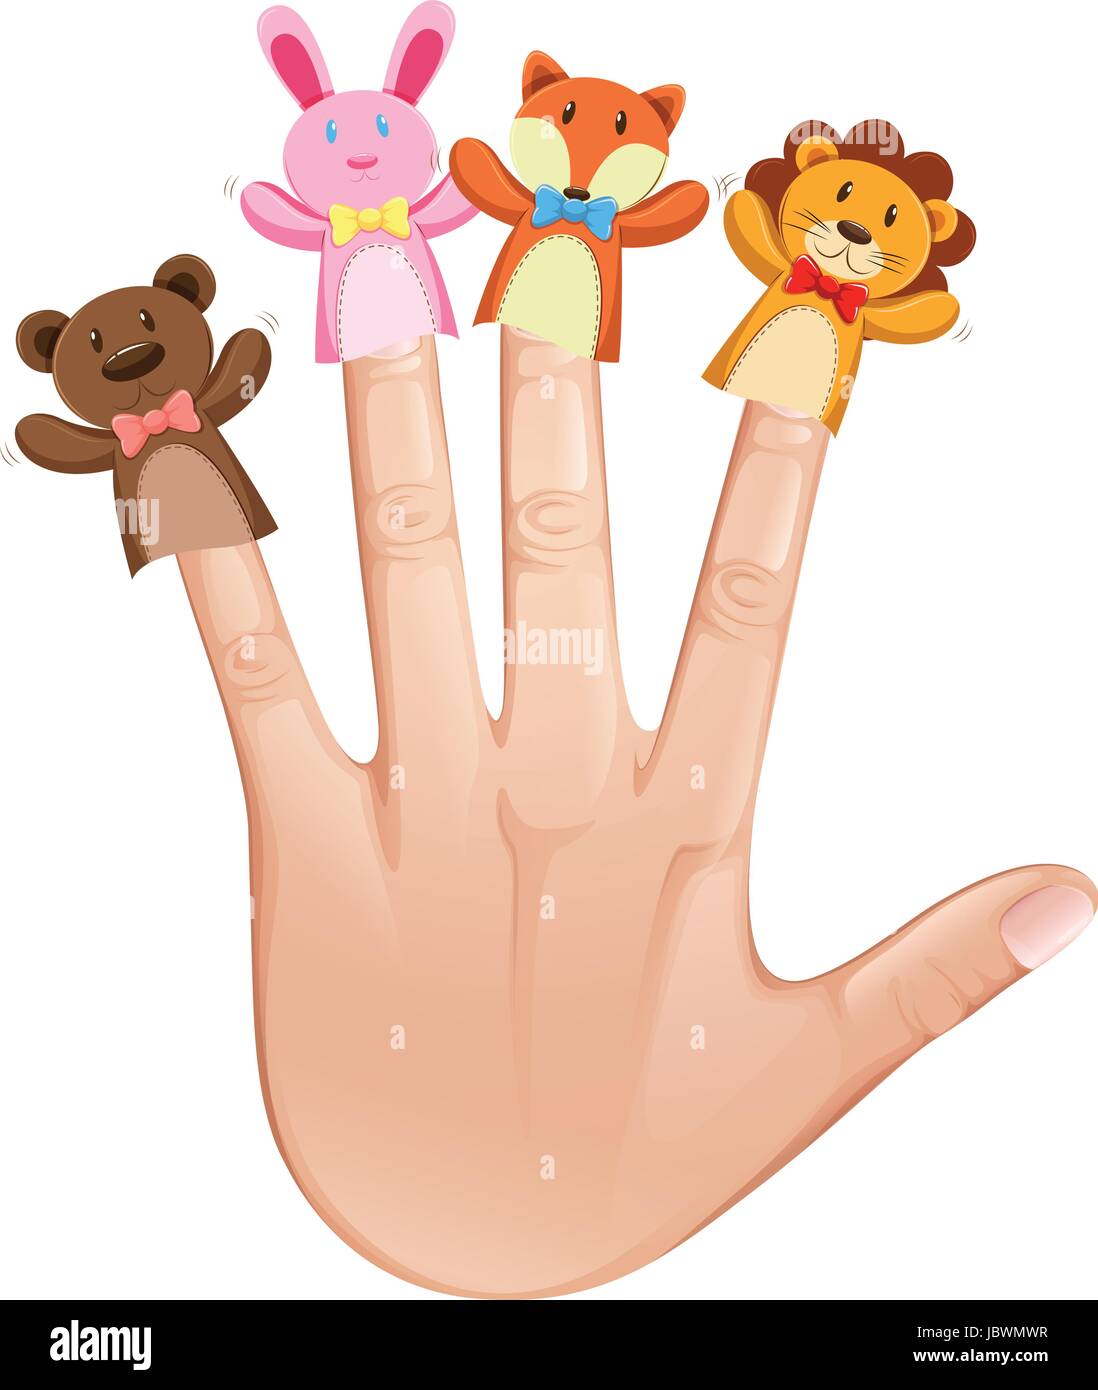 Animal finger puppets on human hand illustration Stock Vector